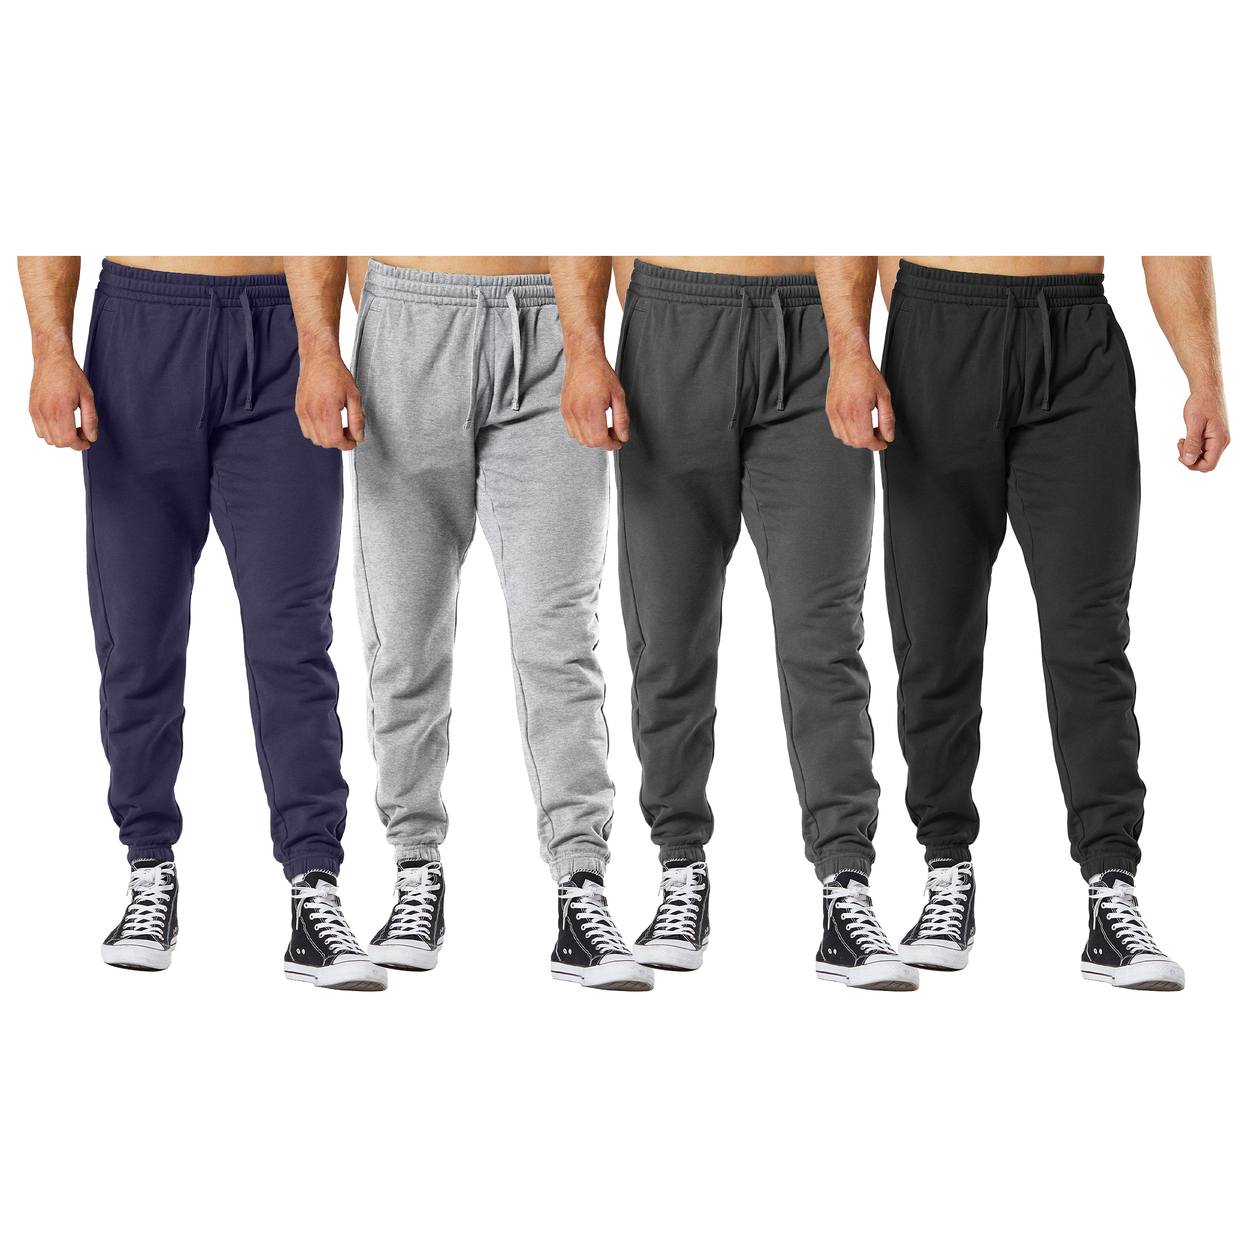 Men's Ultra-Soft Cozy Winter Warm Casual Fleece Lined Sweatpants Jogger - Black, Large